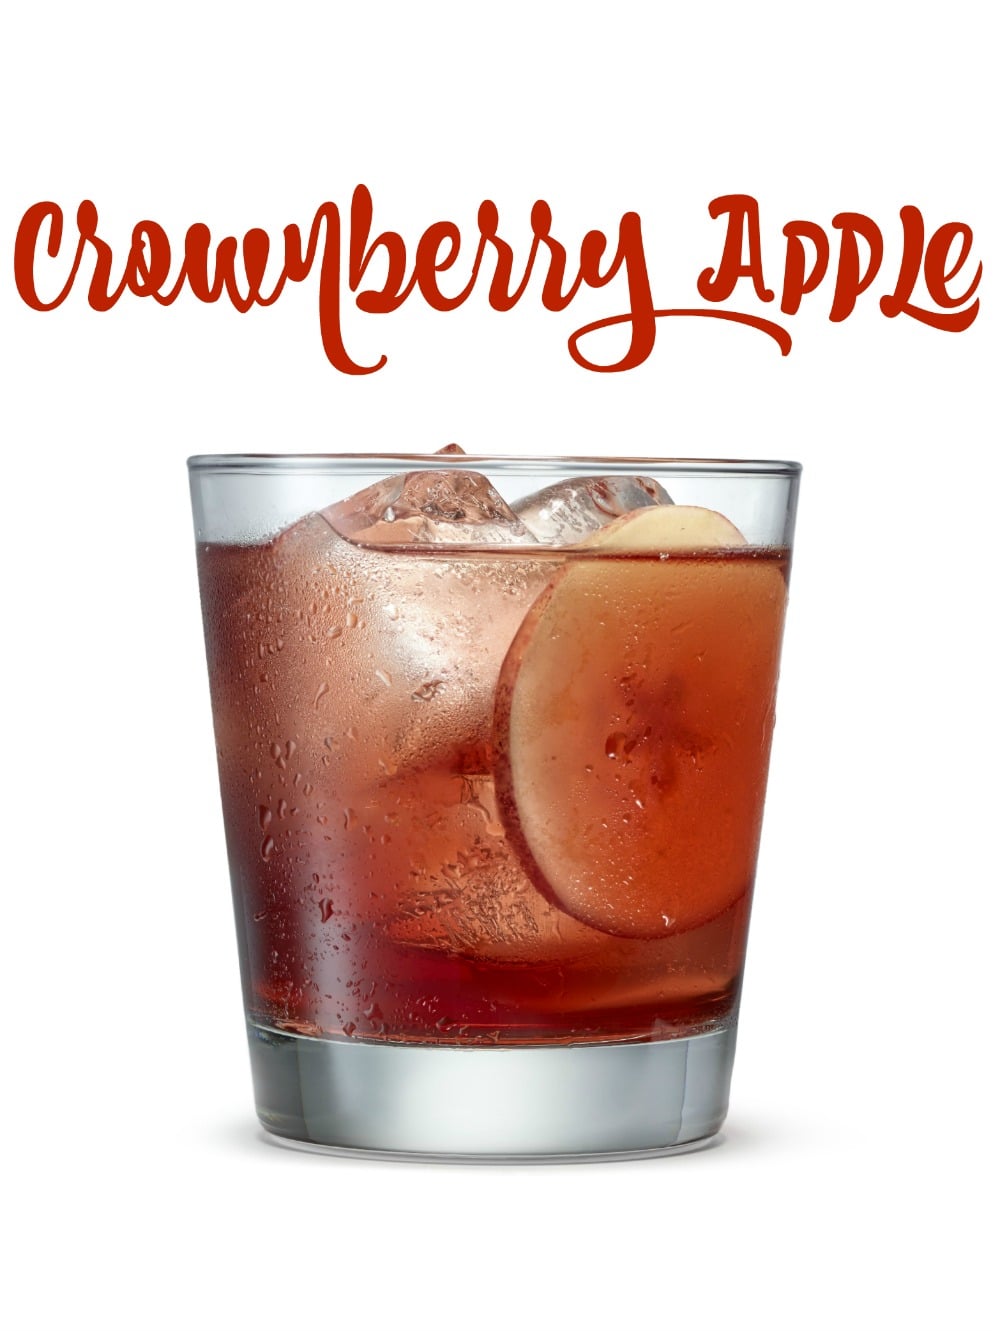 Crownberry Apple Crown Royal Apple Cocktail